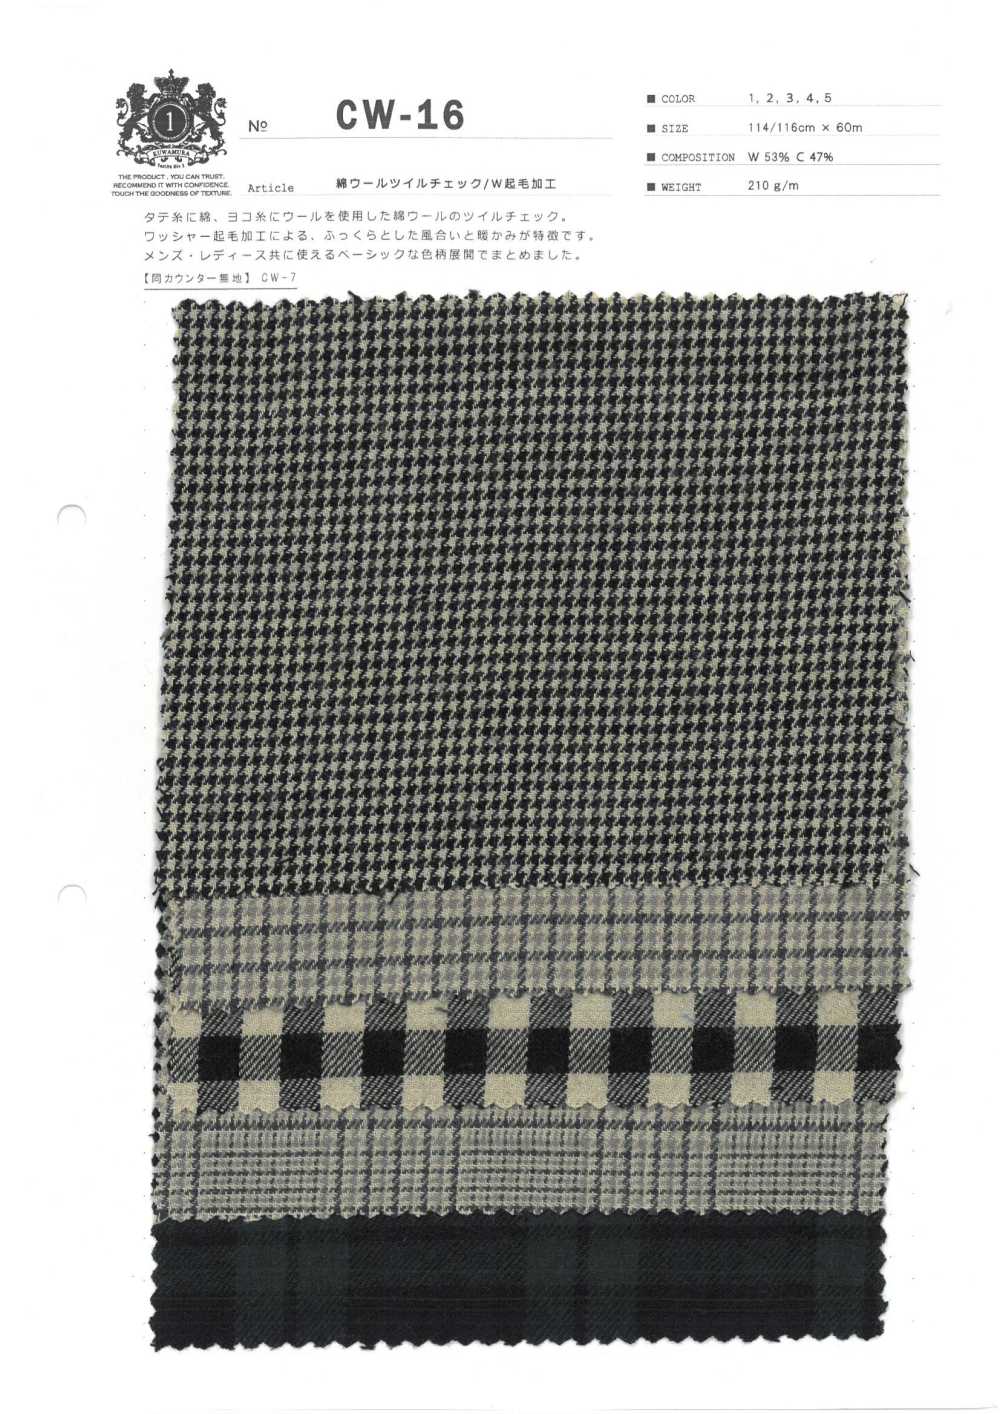 CW-16 Baumwoll-Woll-Twill-Karo/W Fuzzy-Verarbeitung[Textilgewebe] Kuwamura-Faser